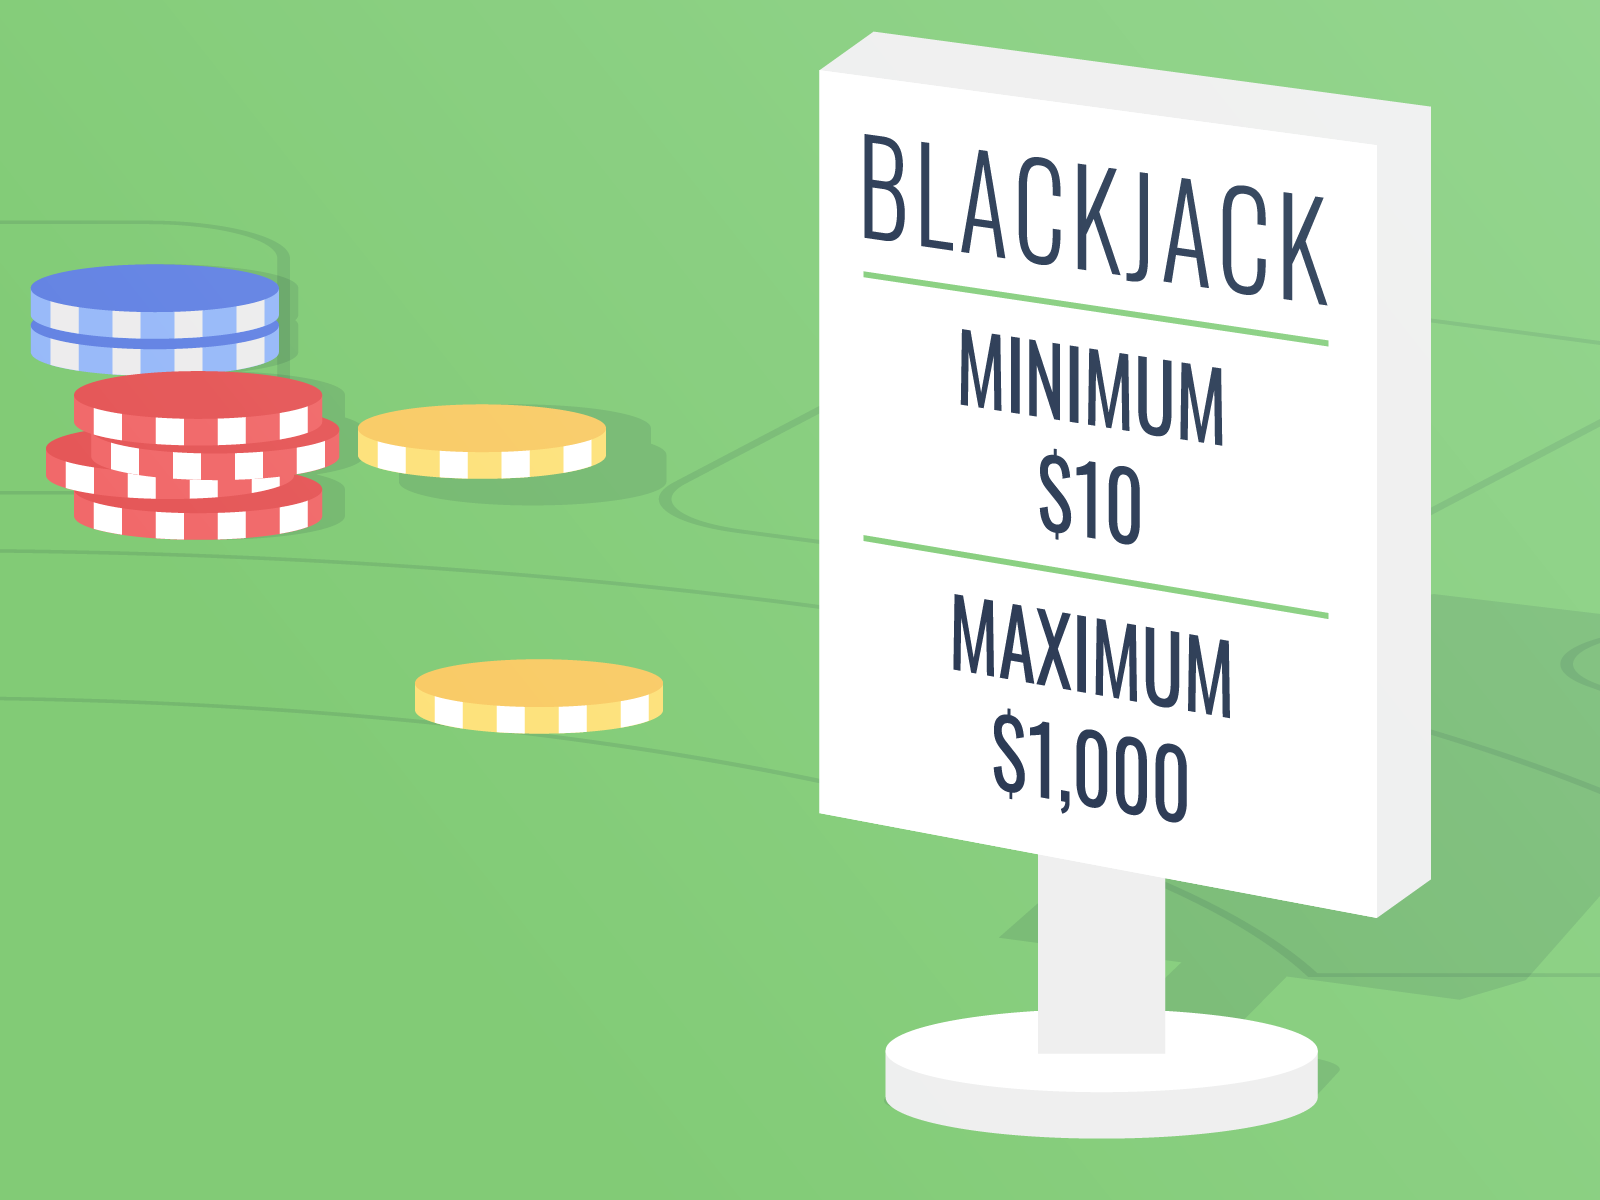 Blackjack betting limits sign